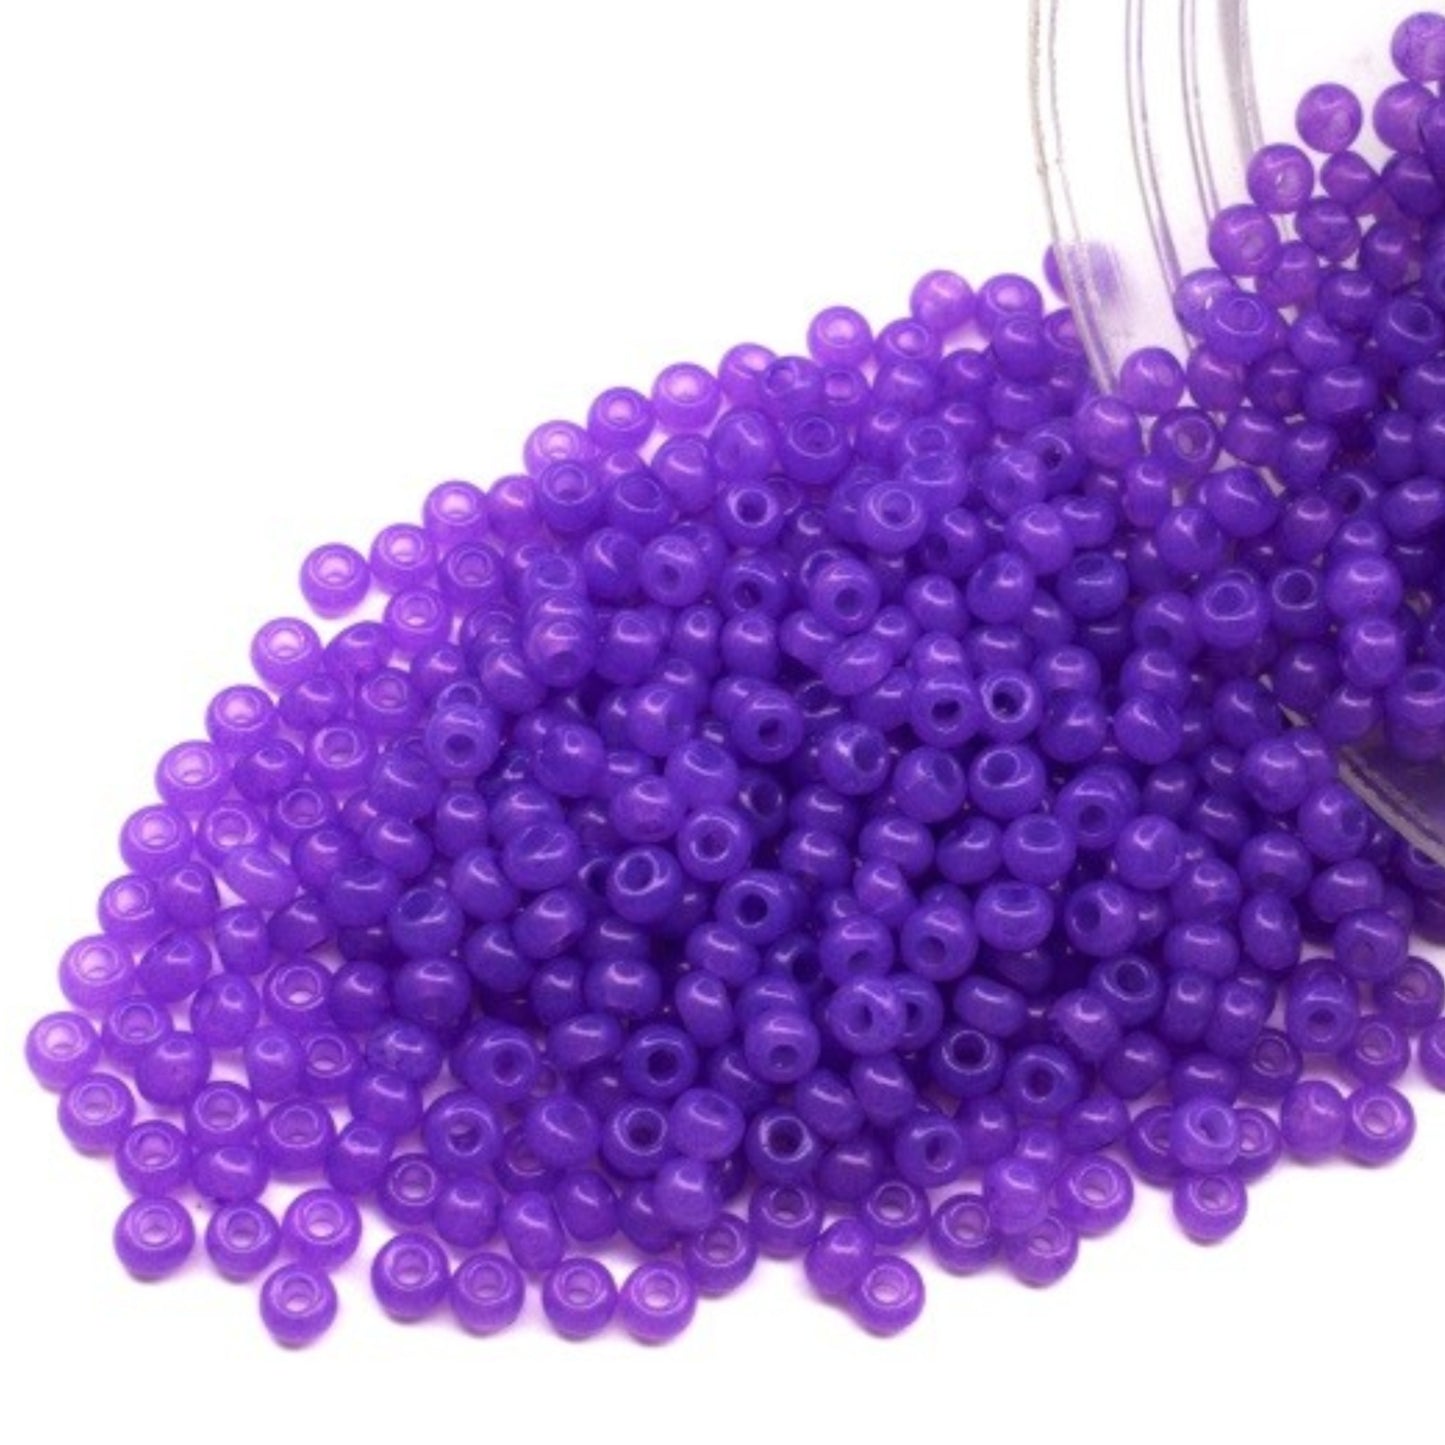 02623 Czech seed beads PRECIOSA round 10/0 purple. Alabaster - Solgel Dyed.